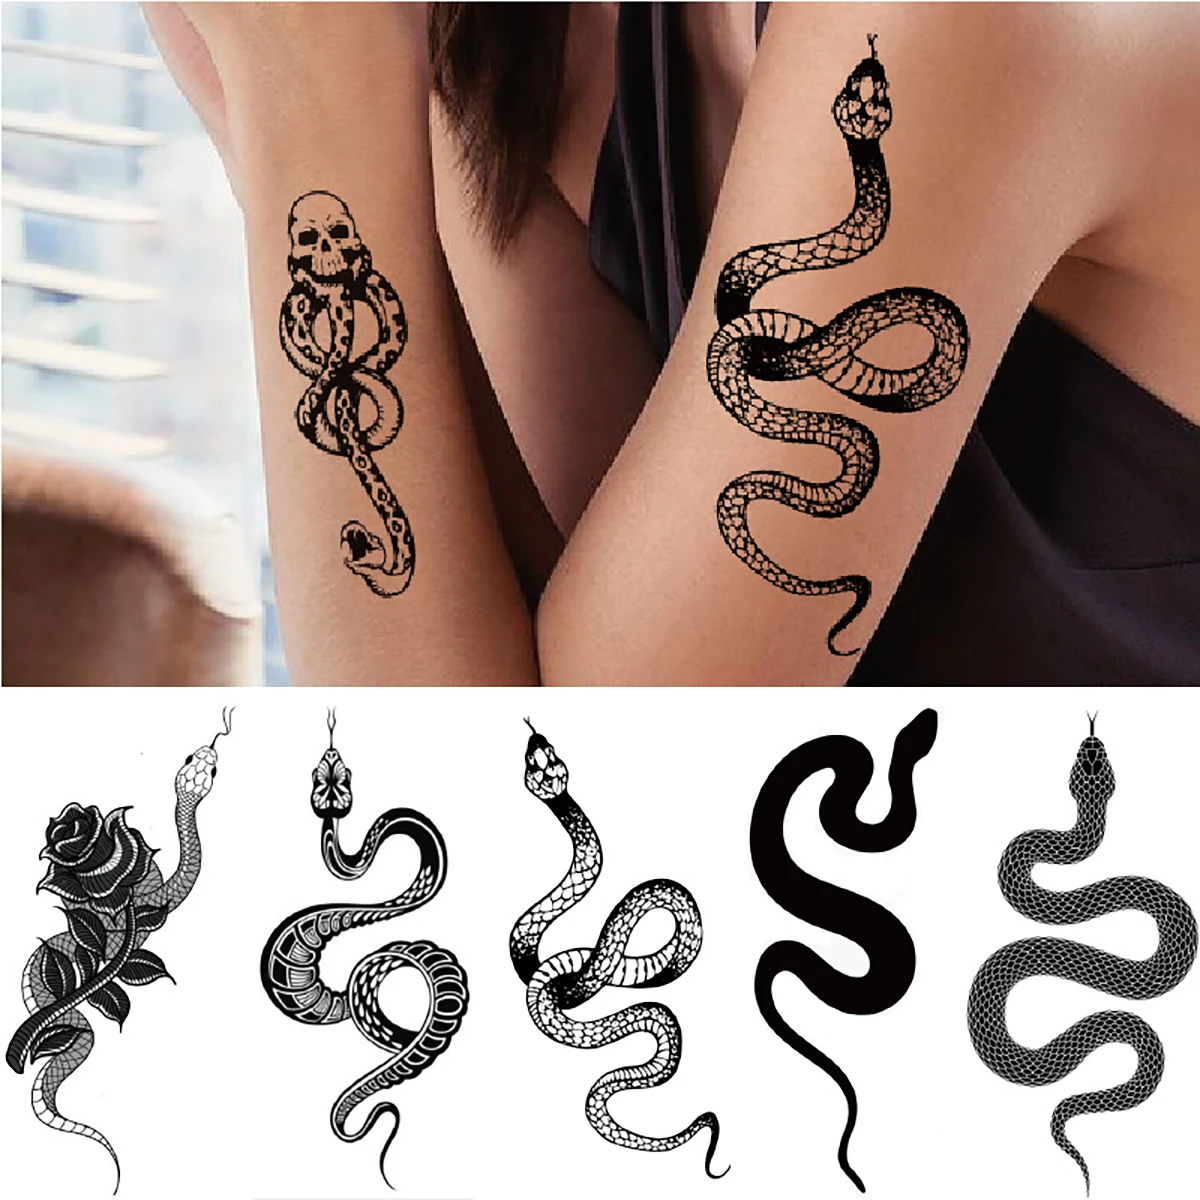 pegatina-de-tatuaje-temporal-de-serpiente-para-hombre-y-mujer-calcomania-impermeable-duradera-imagen-grande-tatuaje-falso-arte-corporal-negro-1-ud